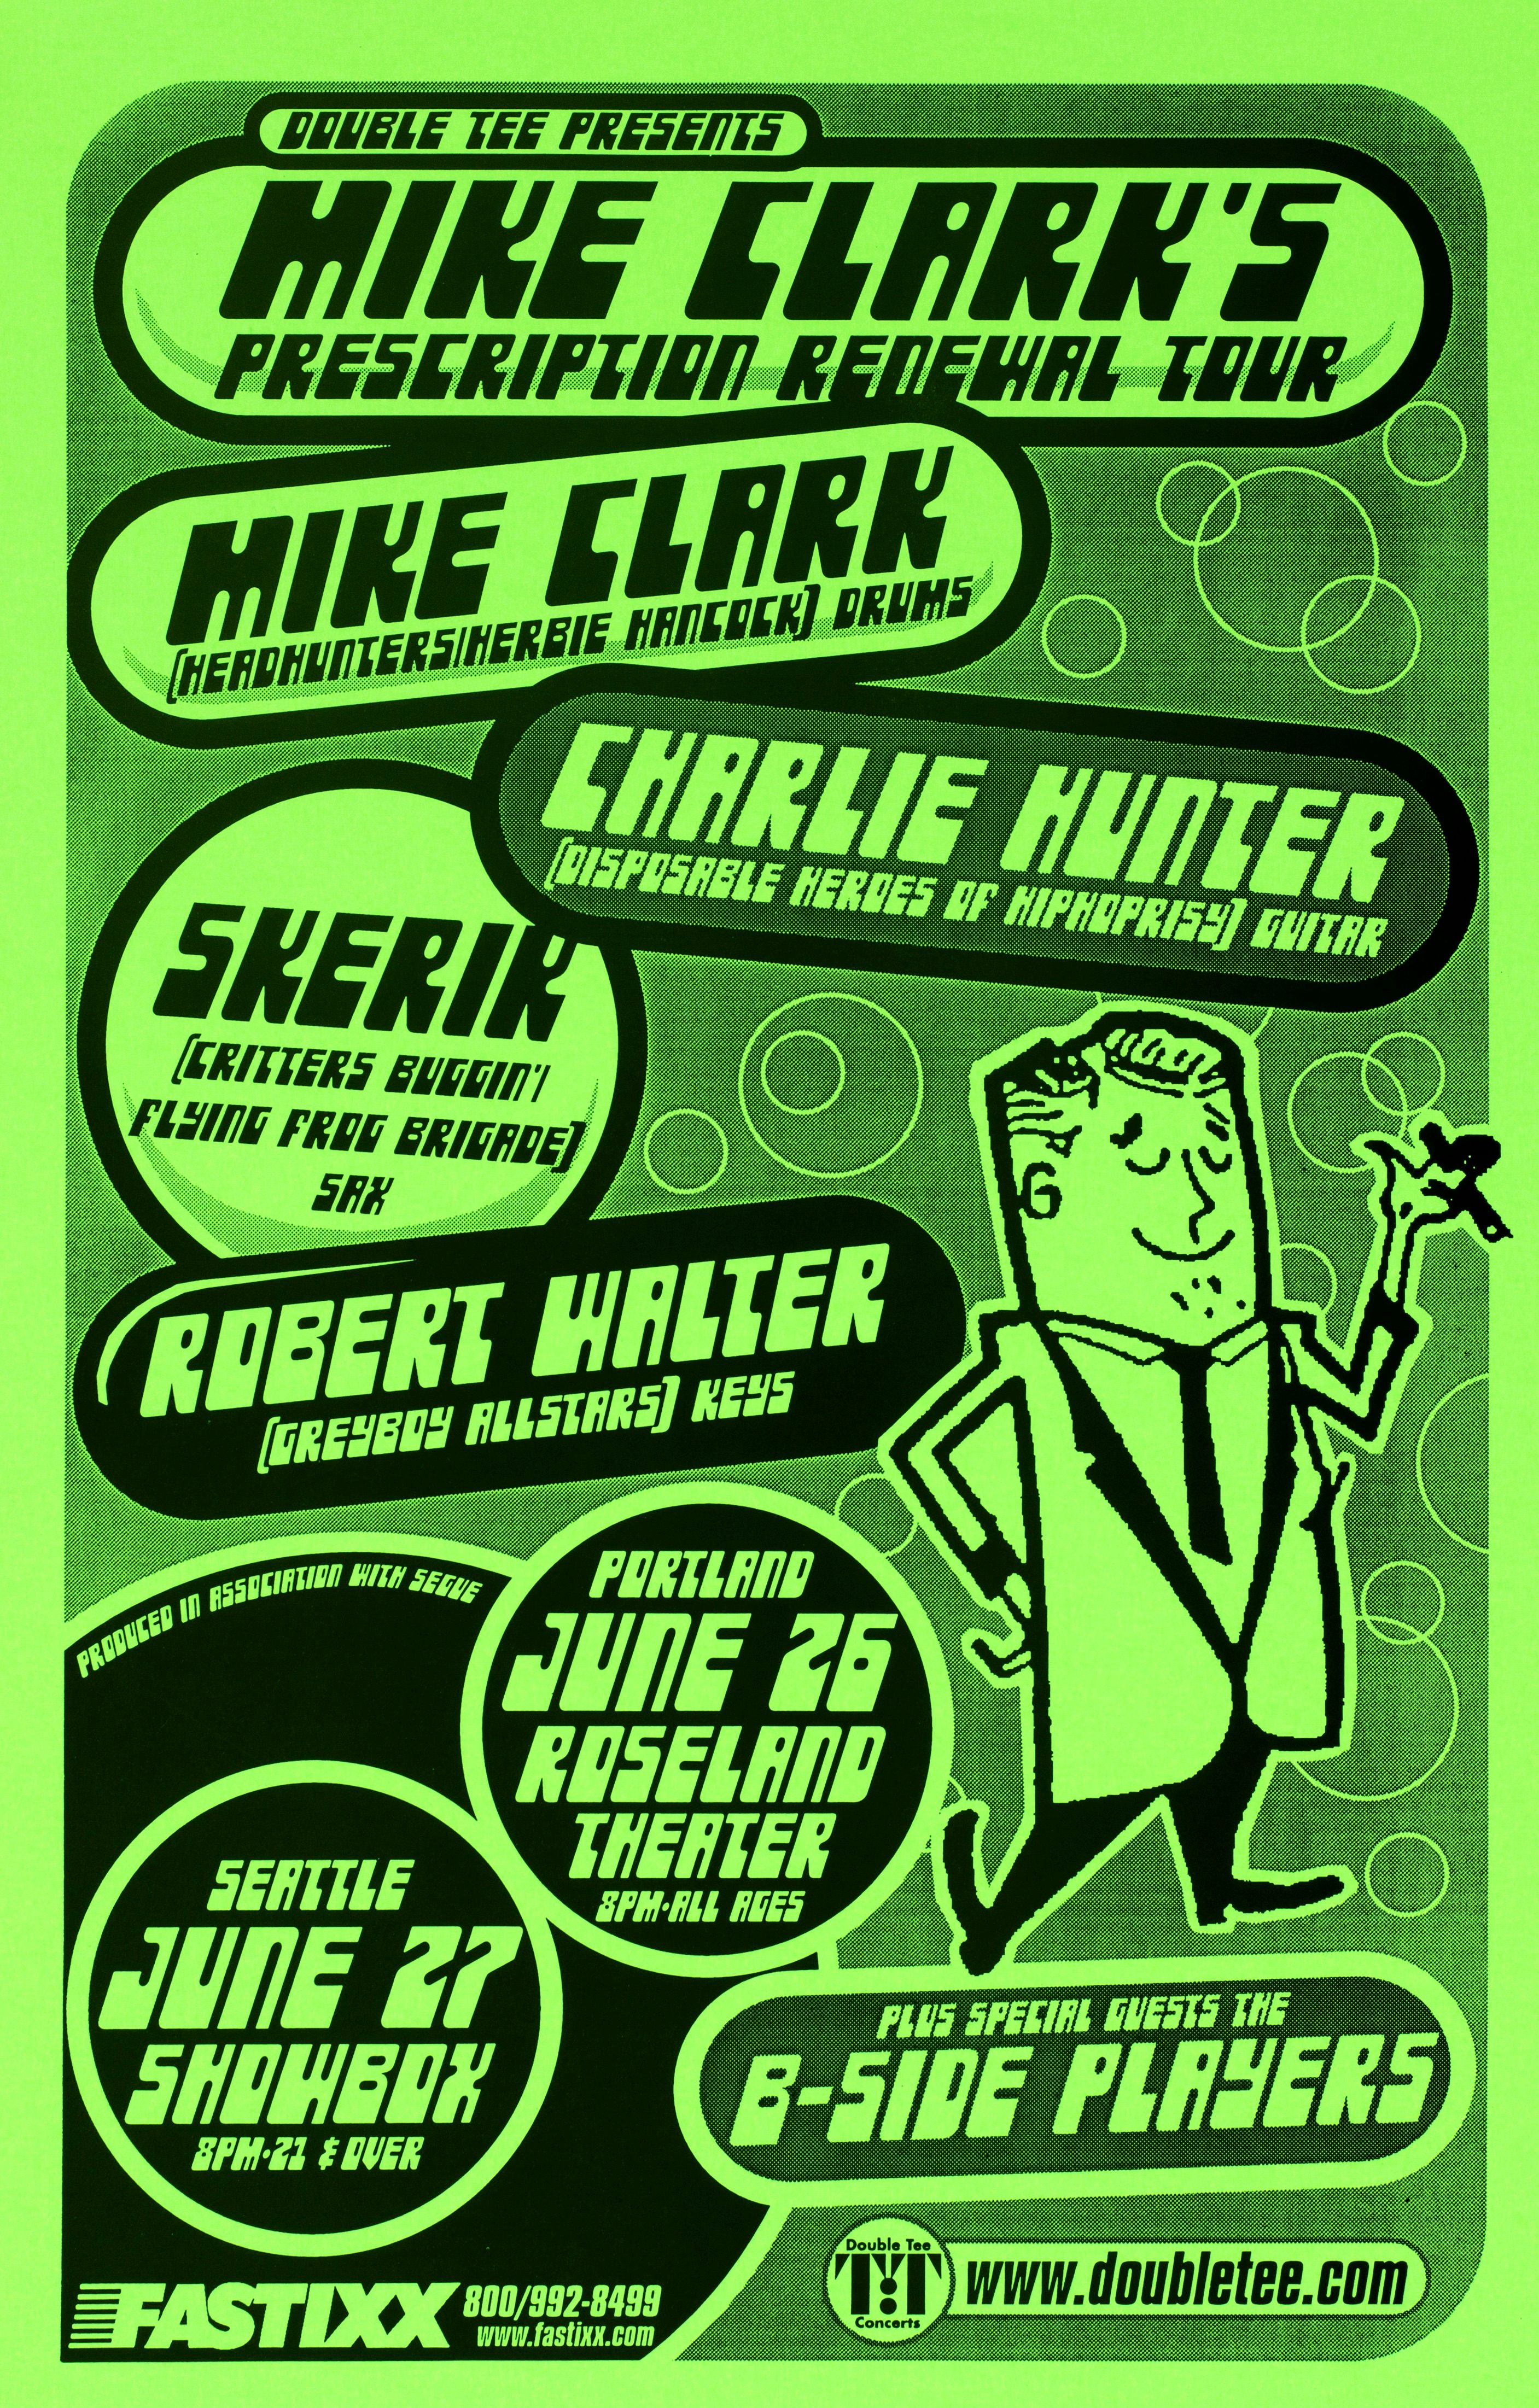 MXP-210.5 Mike Clark's Prescription Renewal Tour Roseland Theater 2001 Green Concert Poster